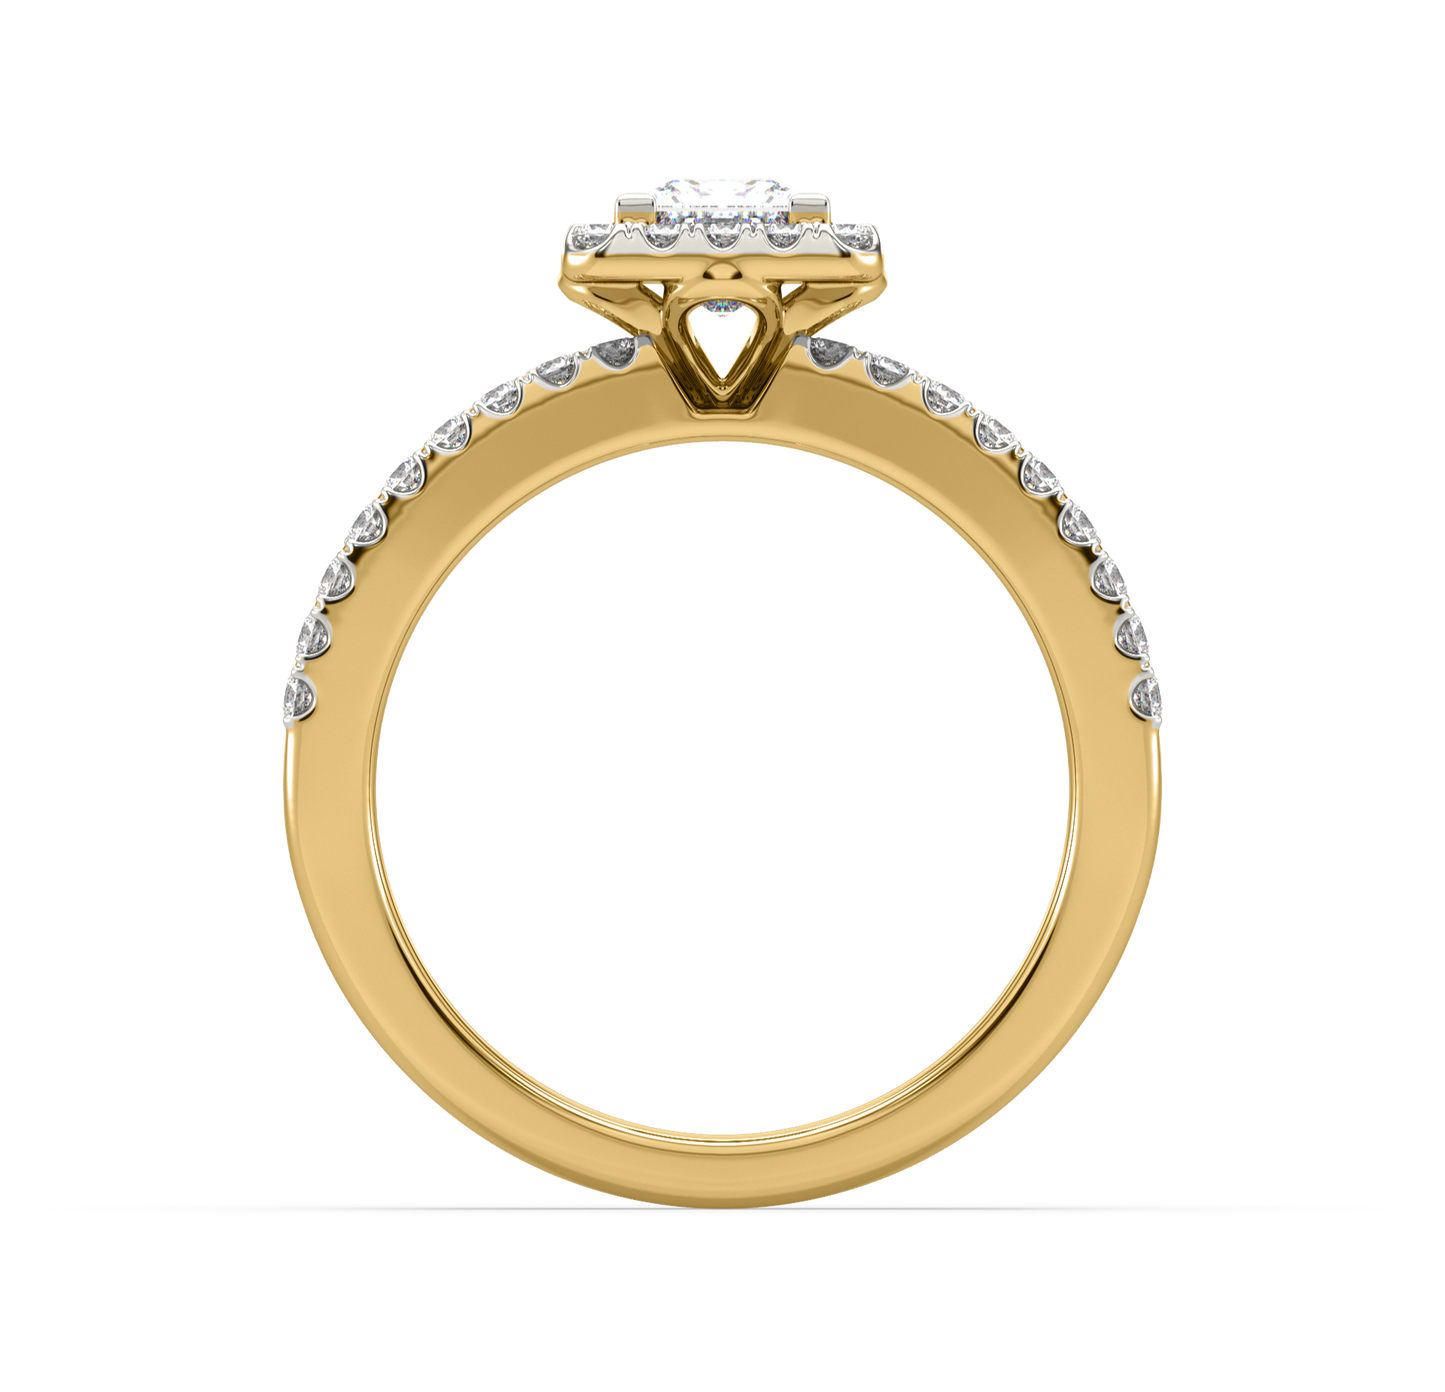 Customised ring RG21004-PH21014